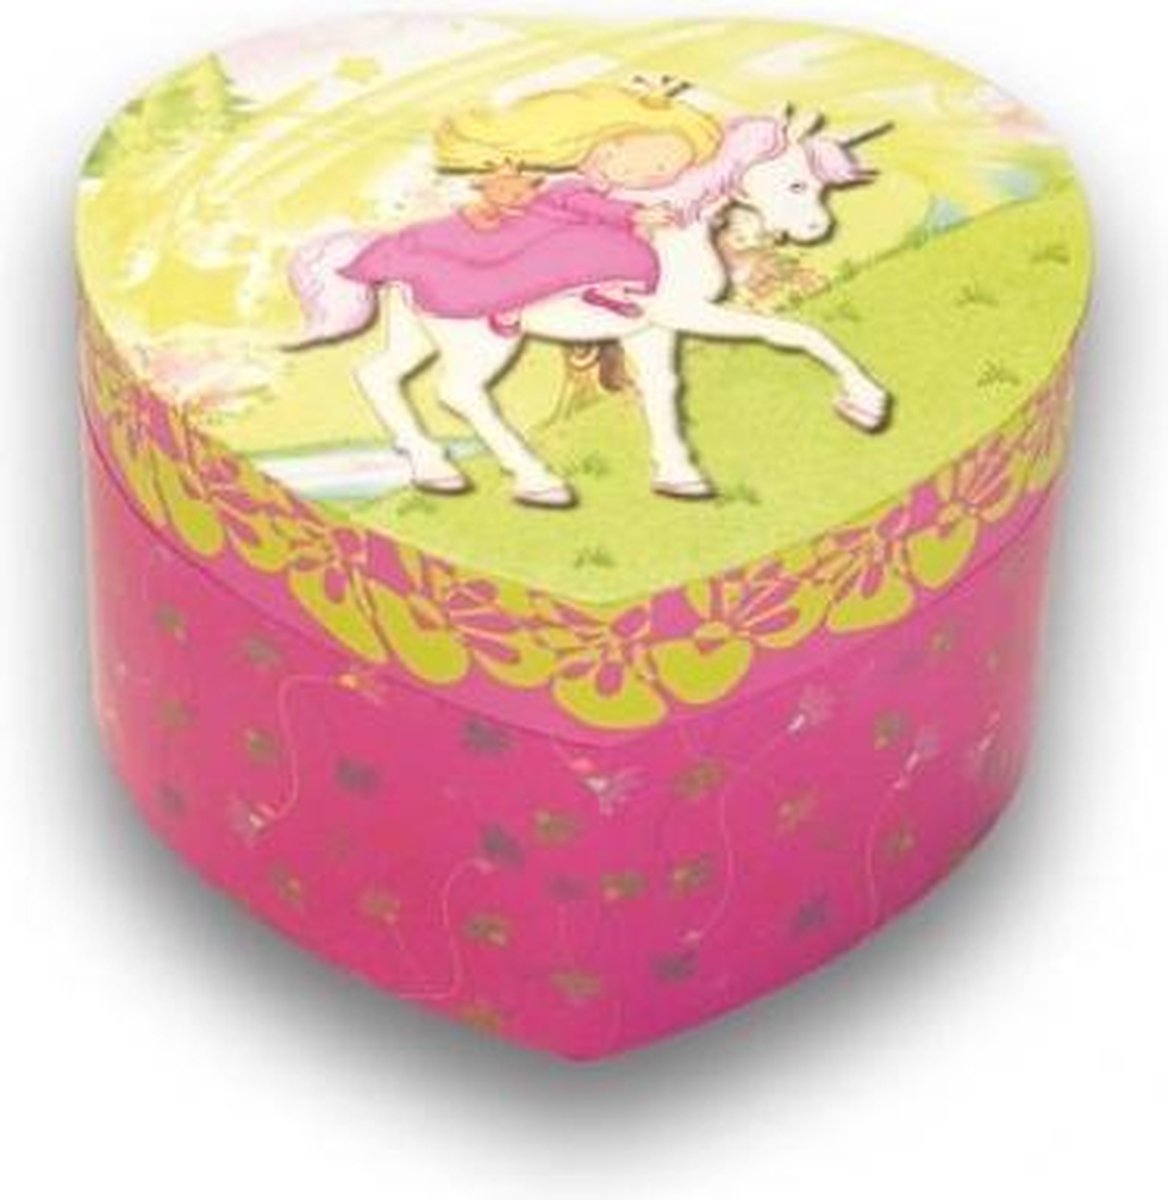 Sieradendoos voor Kinderen - Prinses en Paard - Hartvormig - Simply for Kids - Roze - Met Ballerina - simply for kids